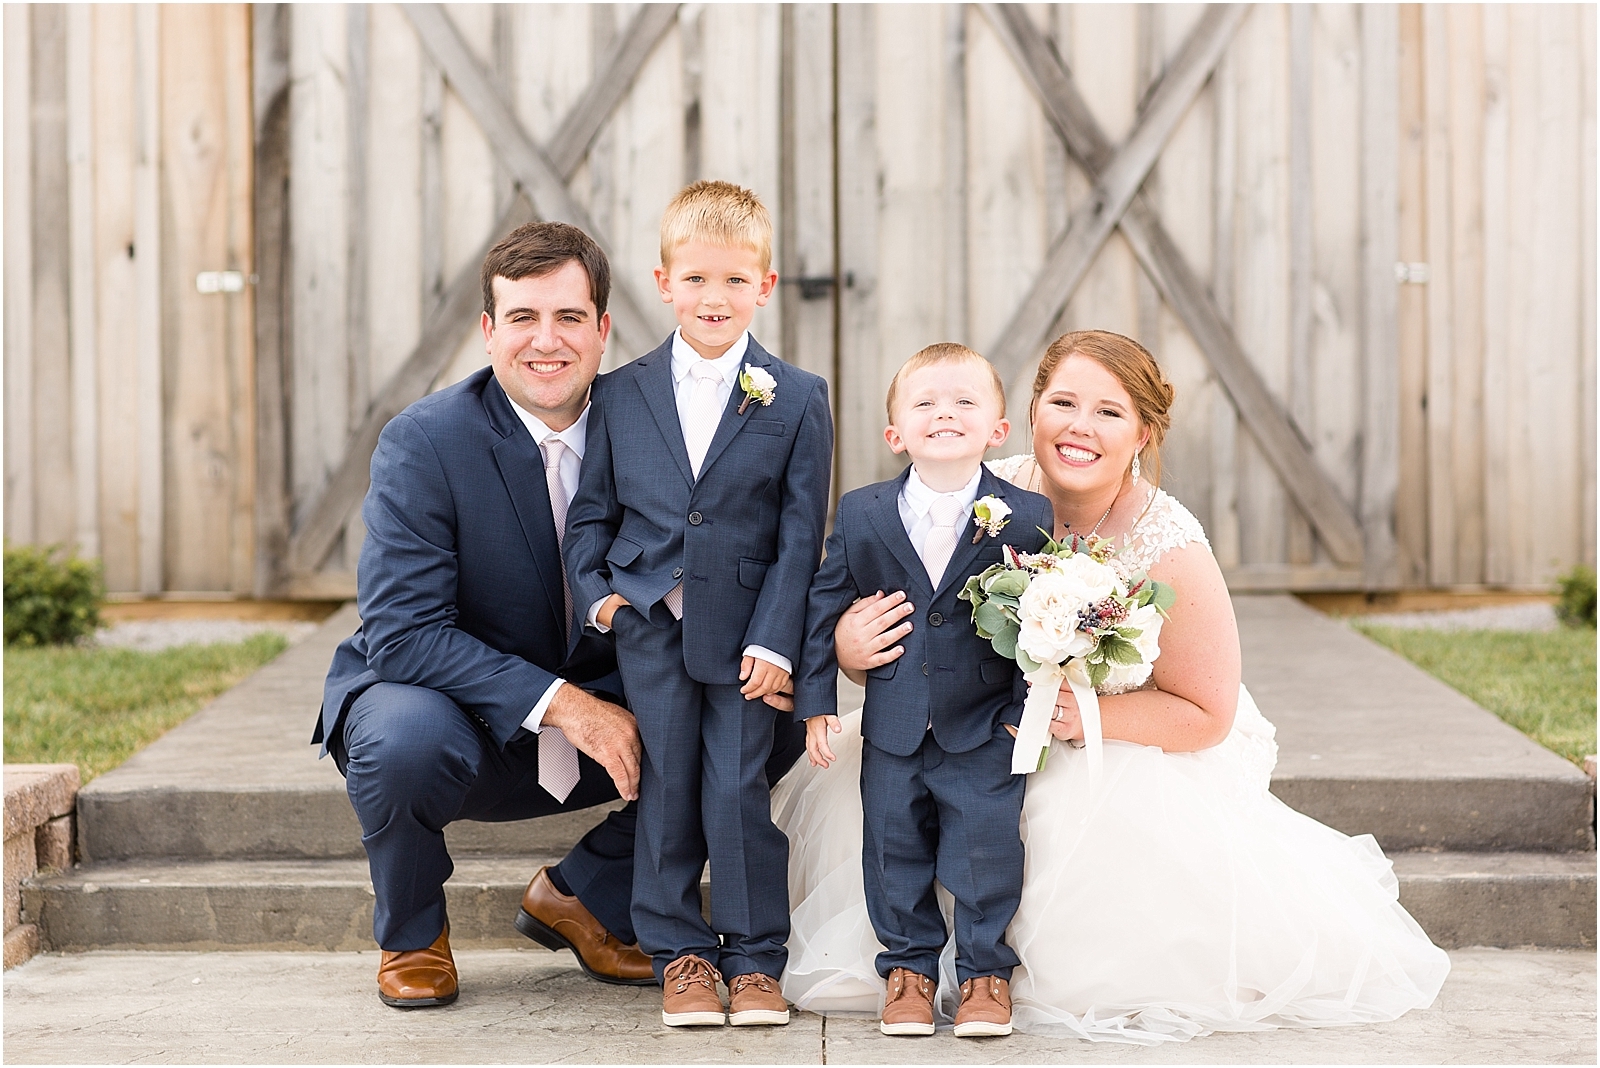 Rachel and Michael | Bret and Brandie Photography | Evansville Wedding Photographers 0053.jpg